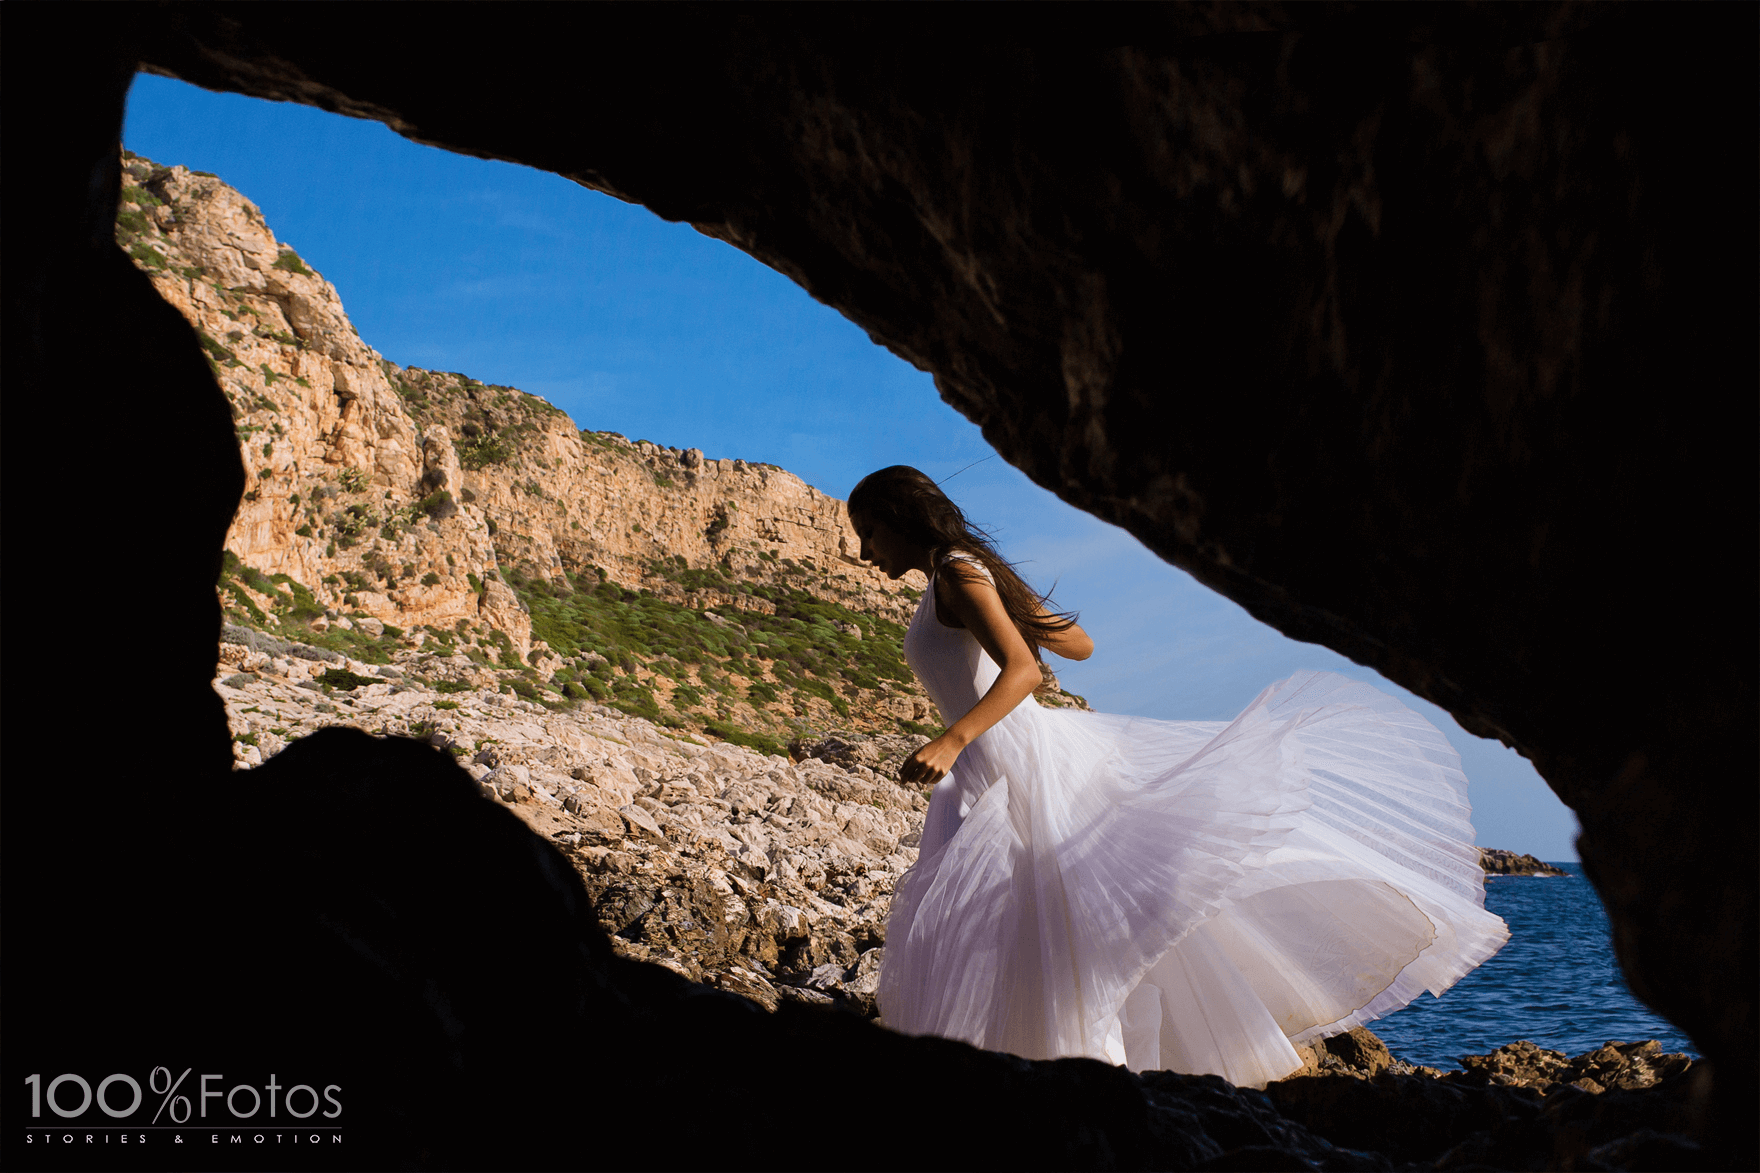 Wedding Photographers in Italy